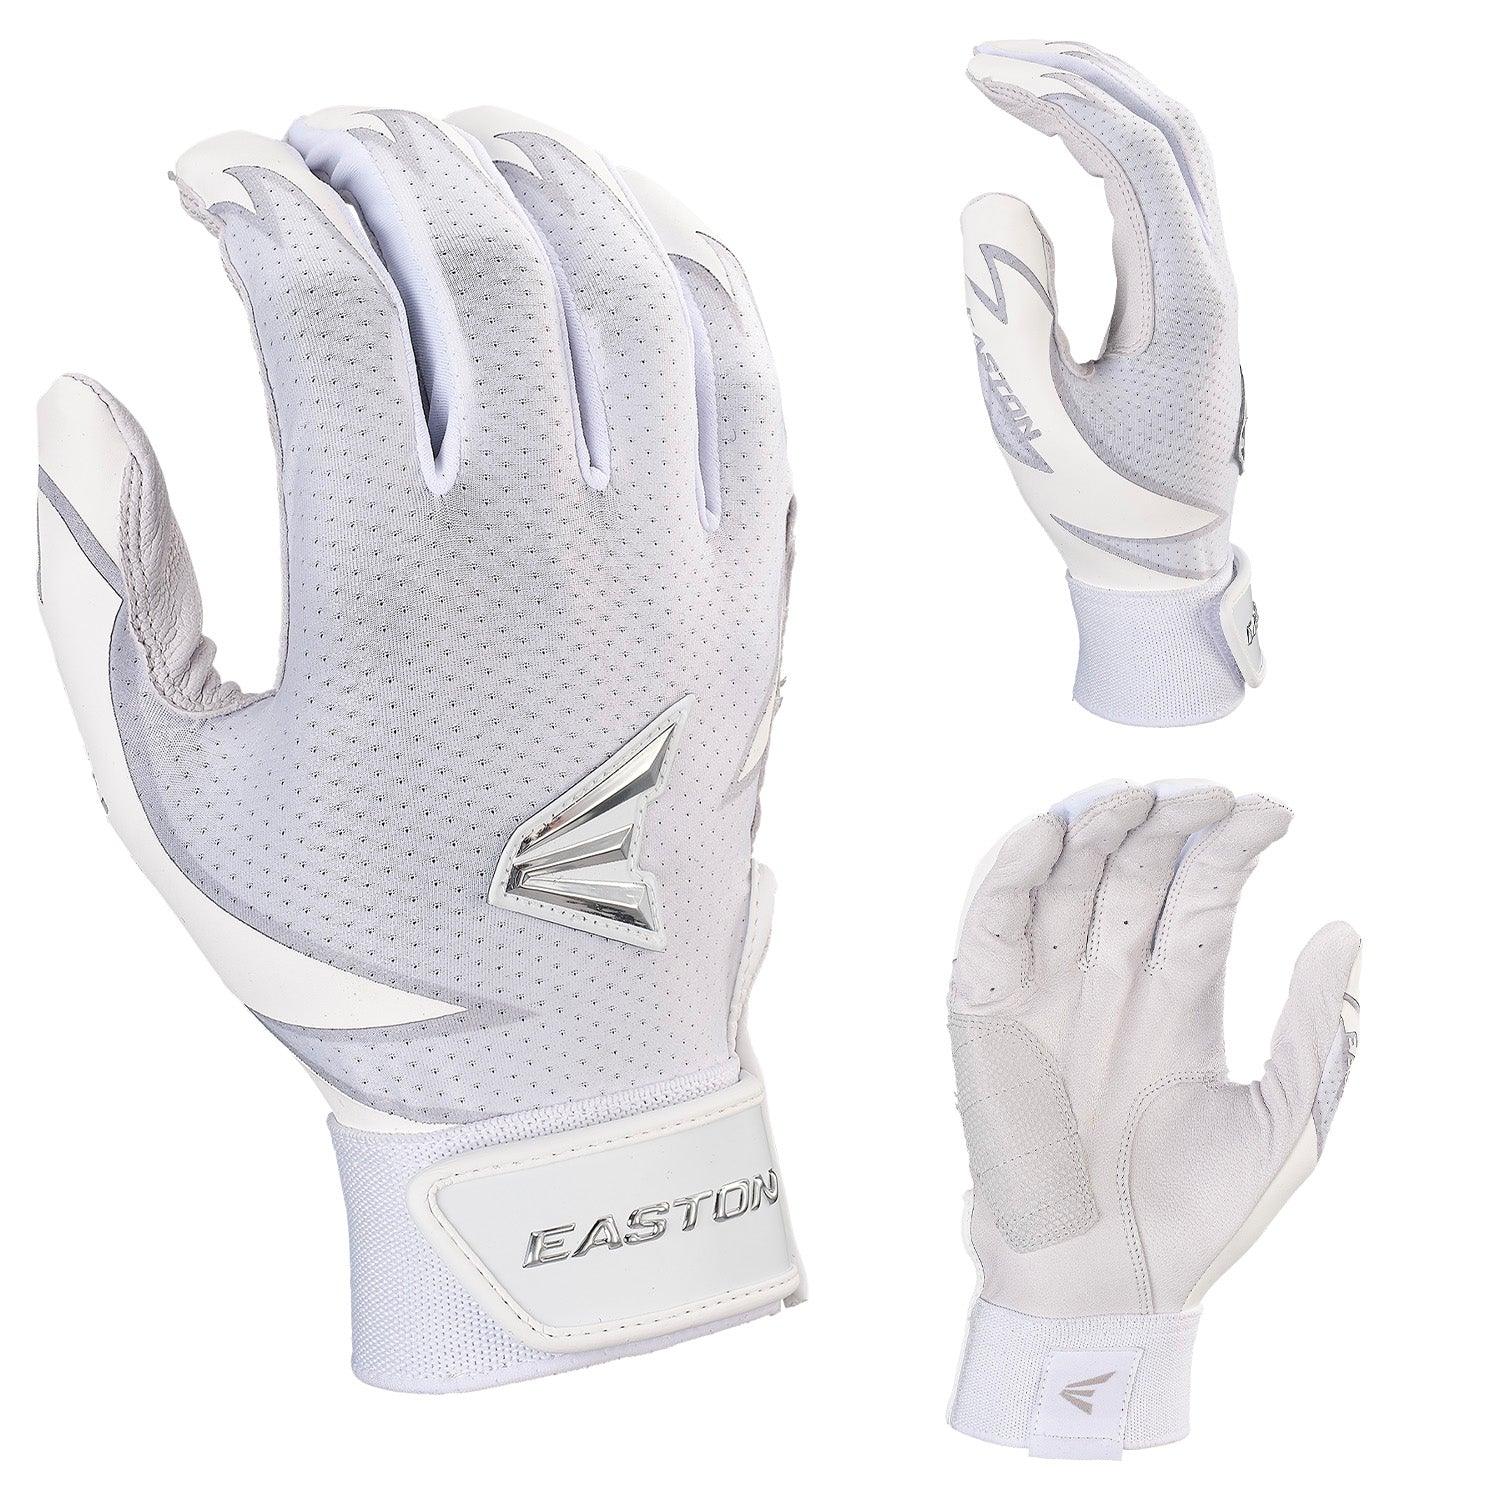 Easton Pro Series Slowpitch Batting Gloves - White